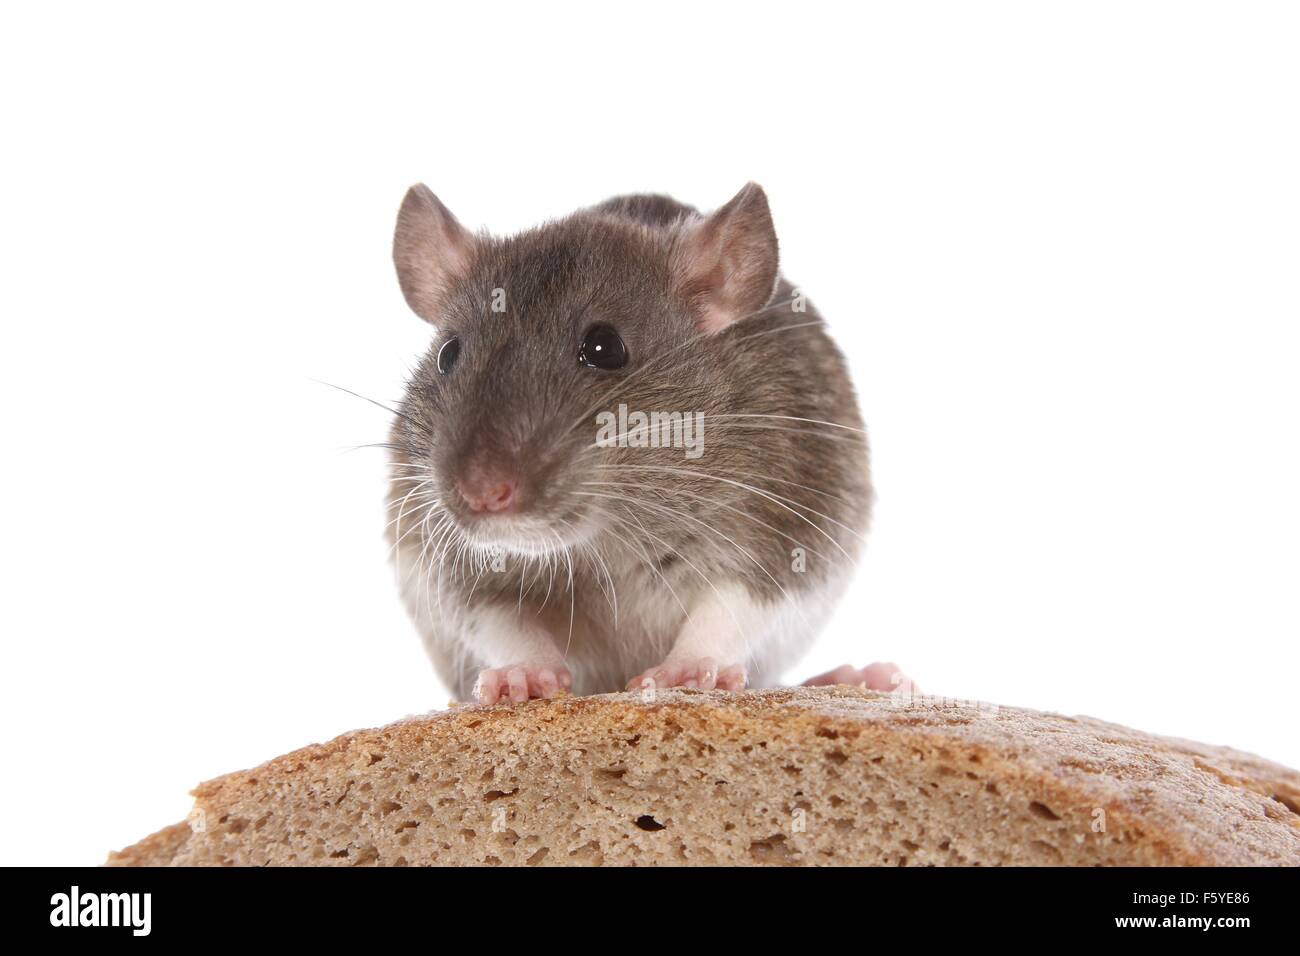 fancy rat sits on bread Stock Photo